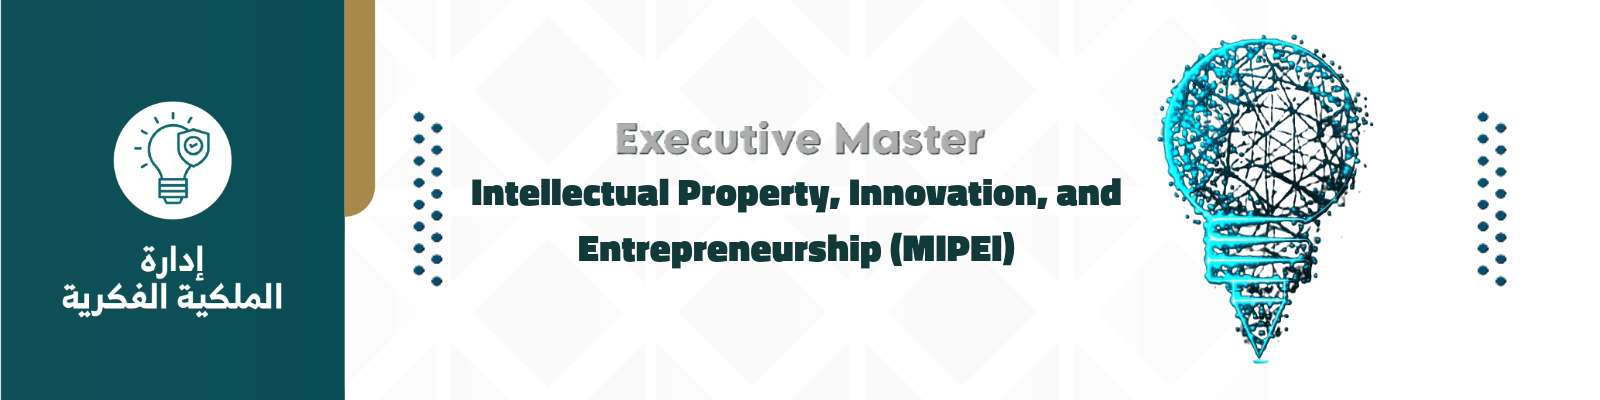 Executive Master in Intellectual Property, Innovation, and Entrepreneurship (MIPEI)